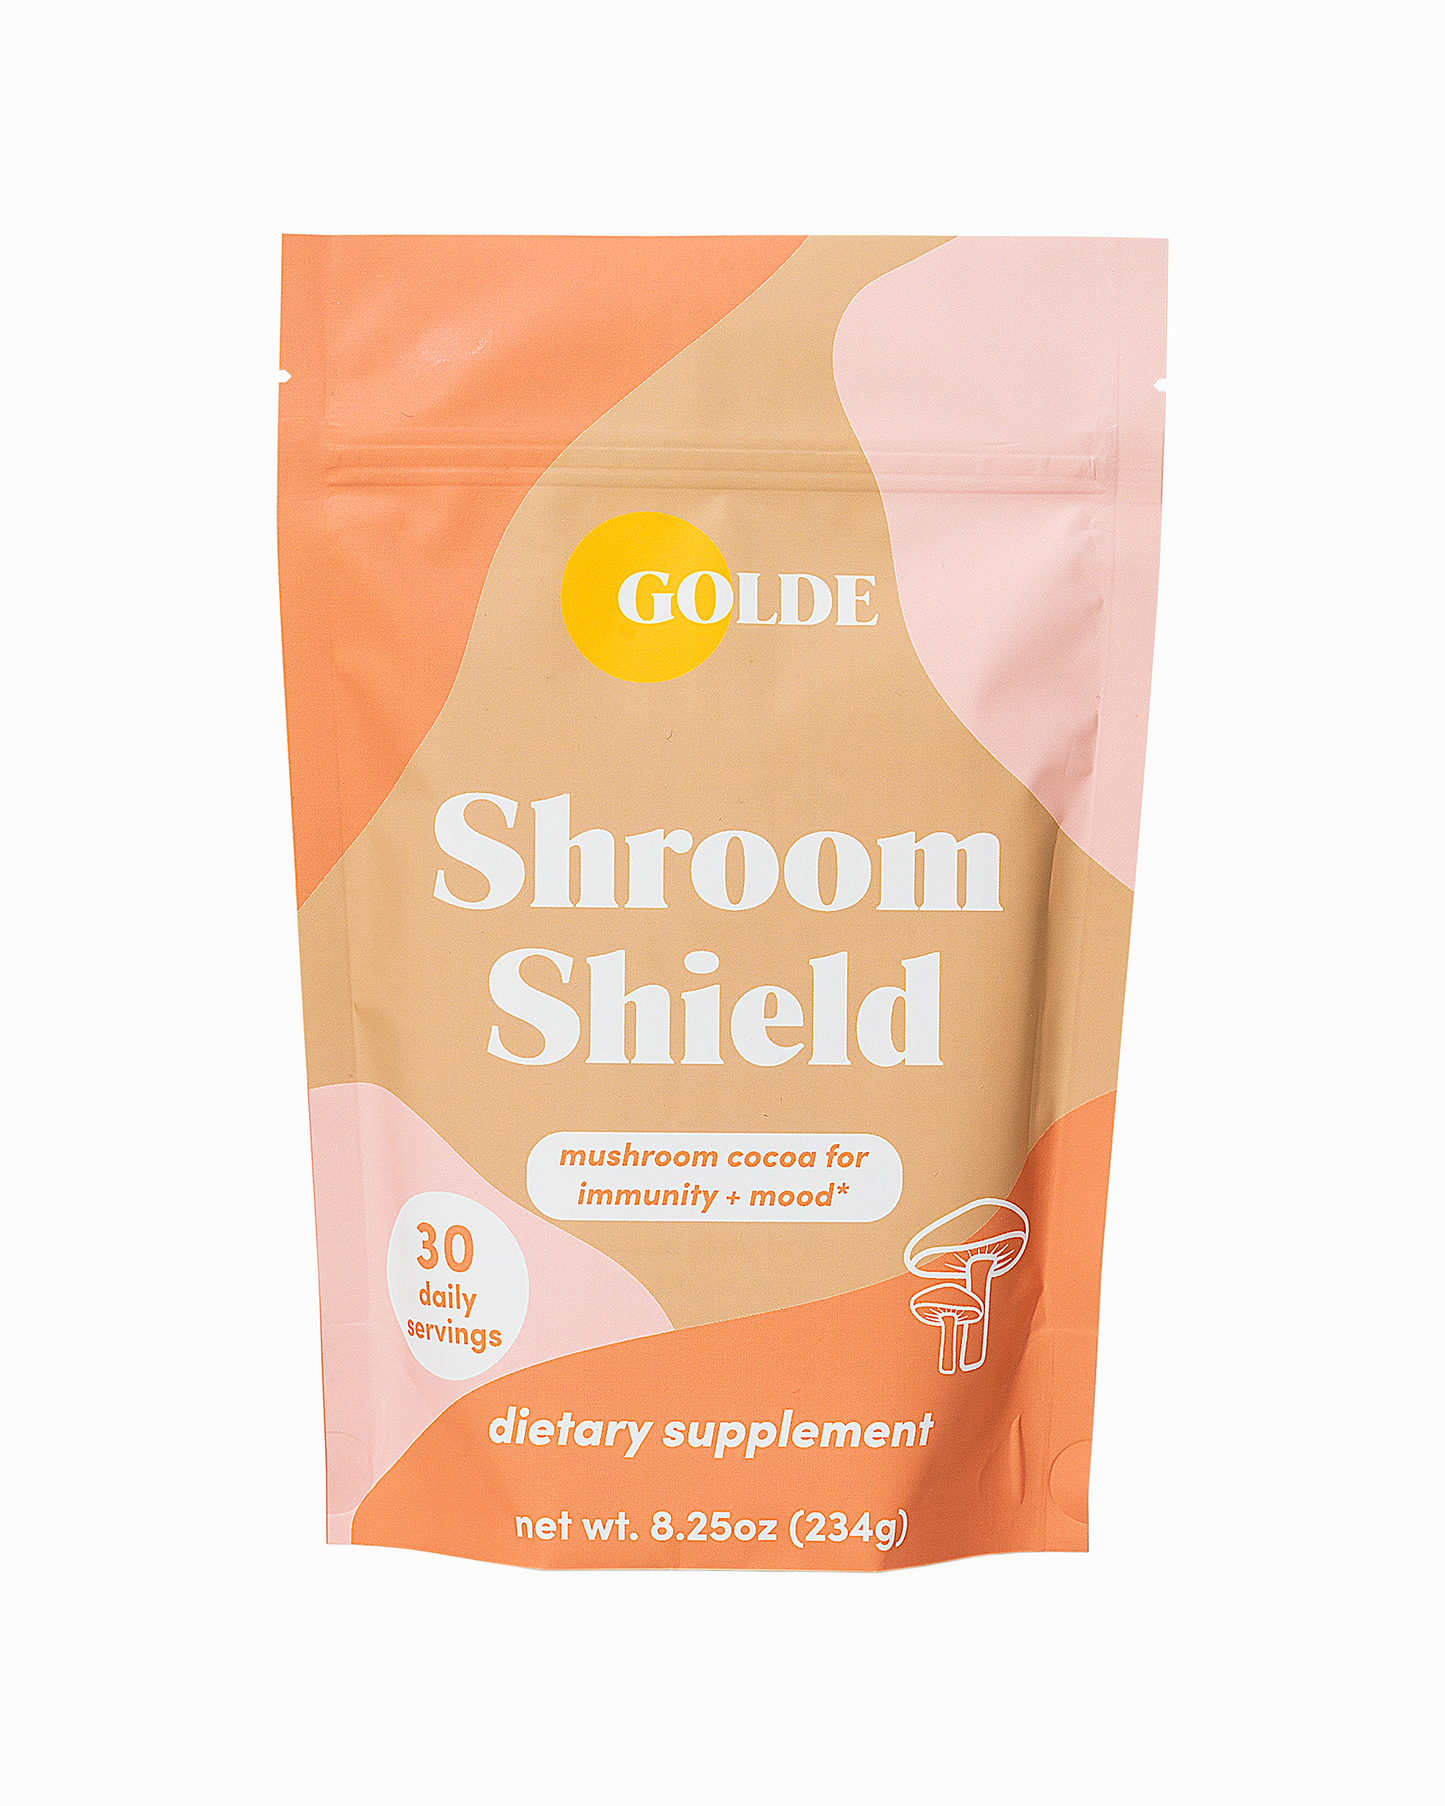 Golde: Shroom Shield